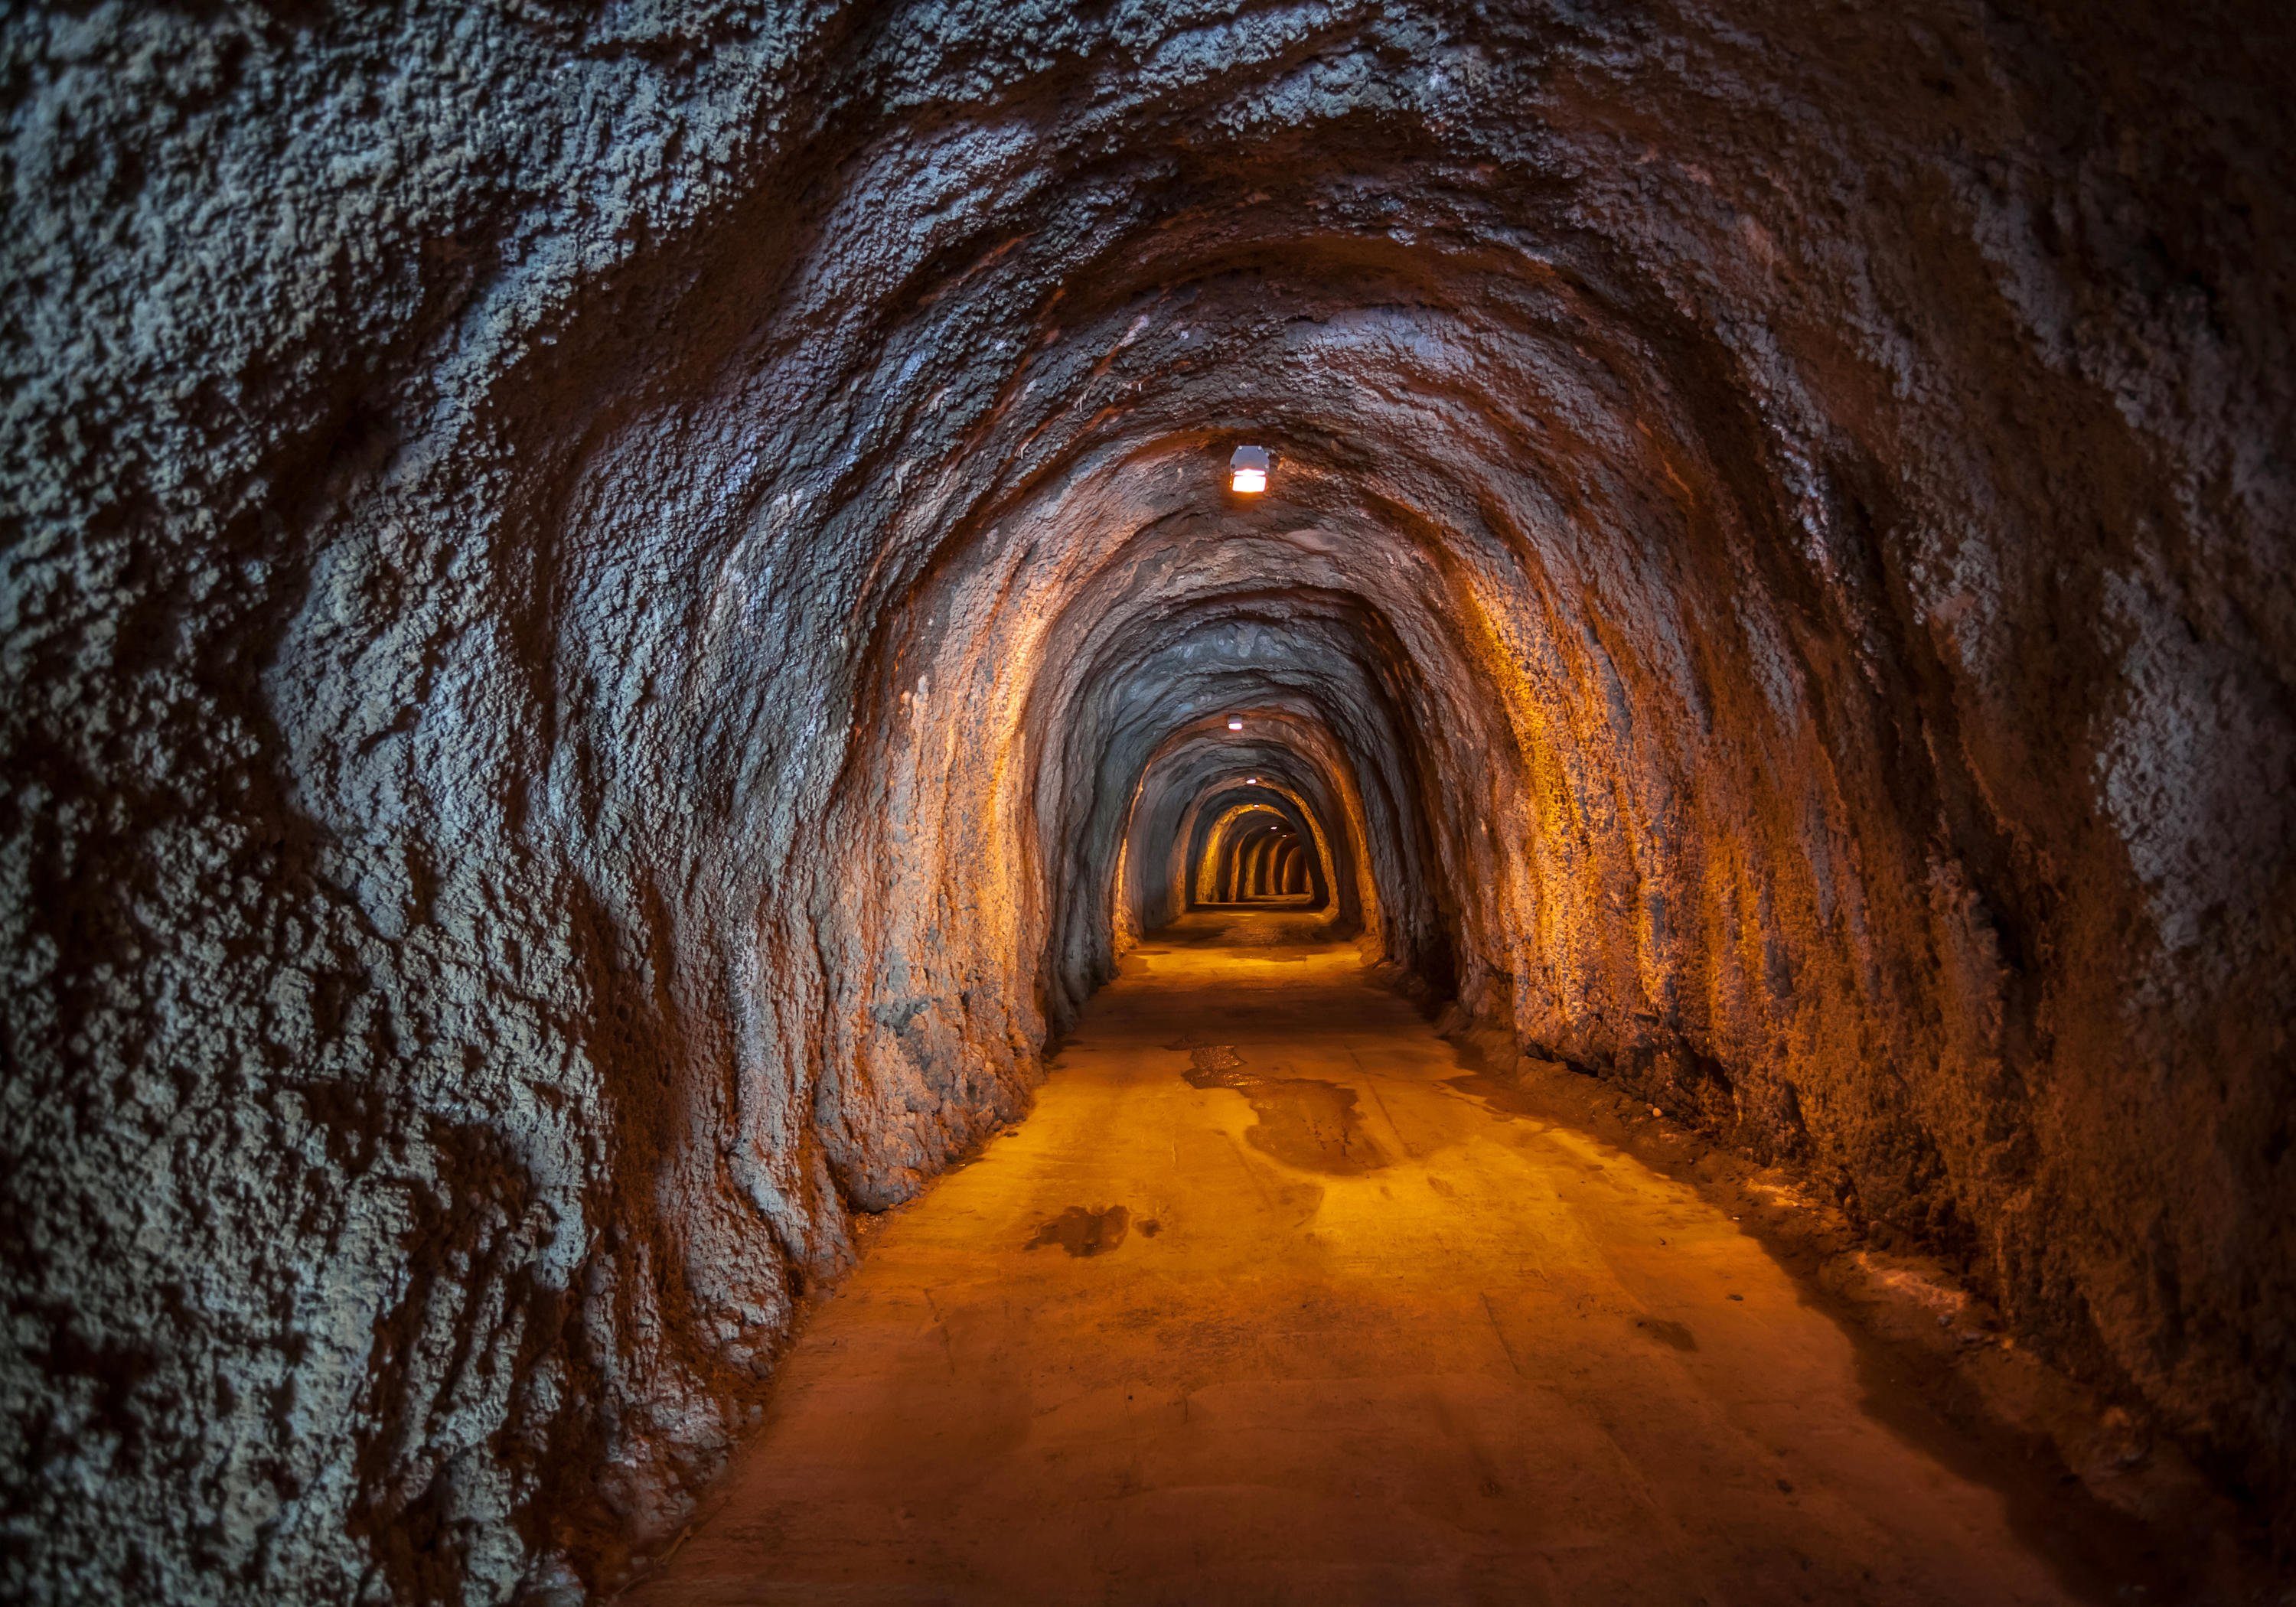 wandmotiv24 Fototapete unterirdischen Tunnel, matt, Wandtapete, glatt, Motivtapete, Vliestapete